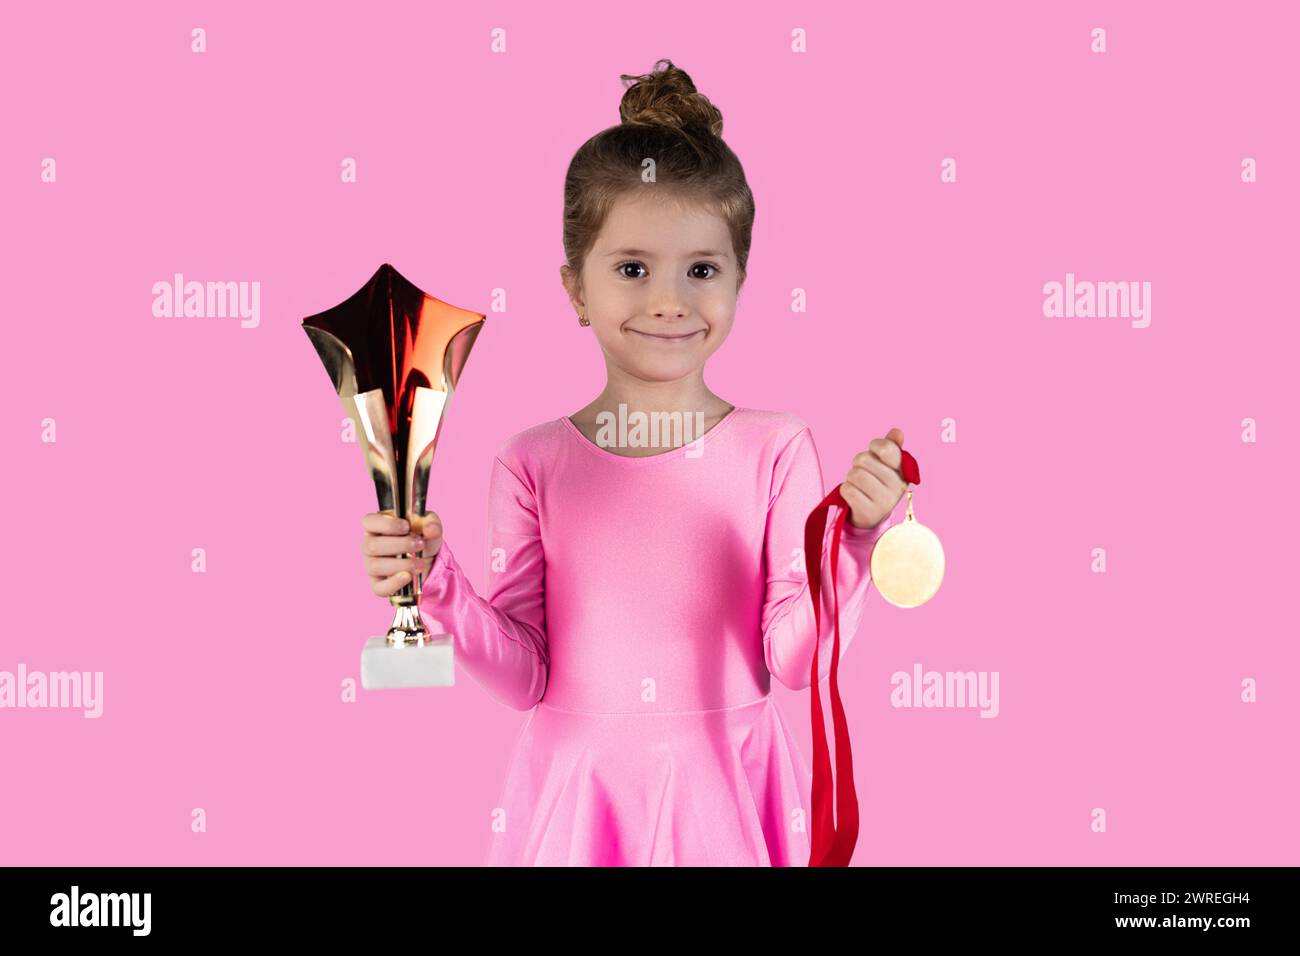 Joyful sports girl celebrating victory isolated on pink background wearing gold medal showing trophy she won. High quality photo Stock Photo